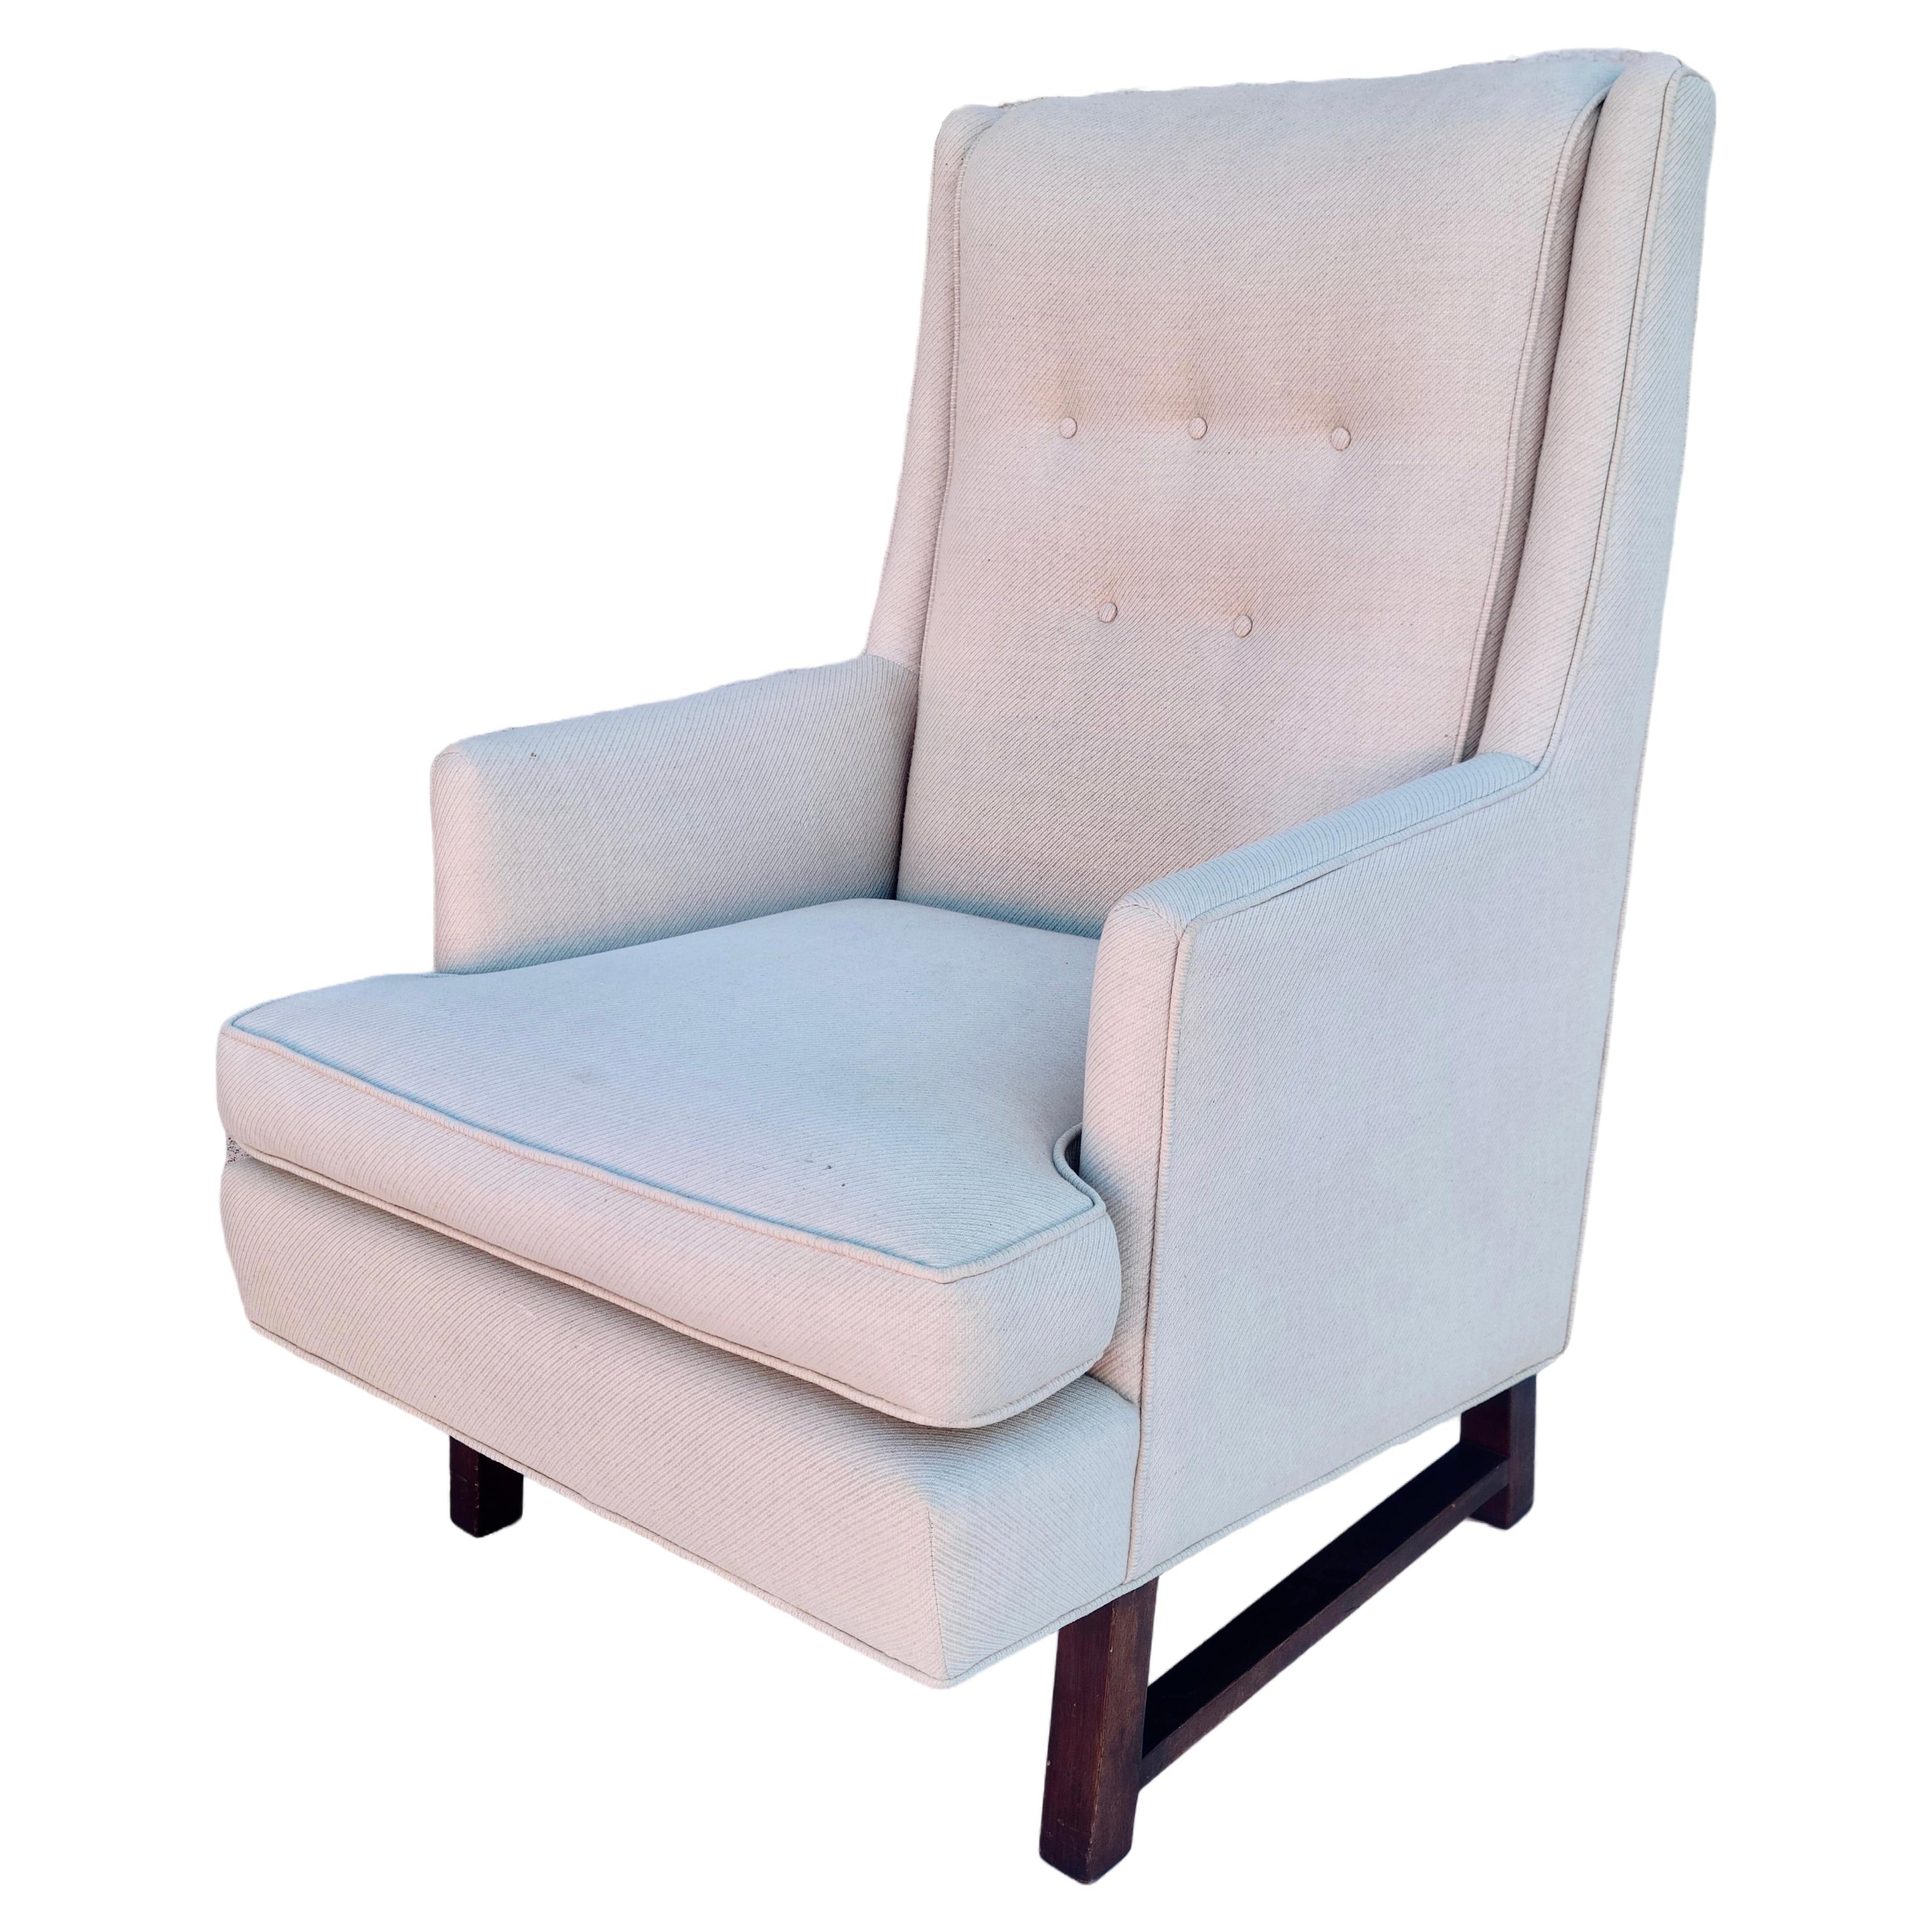 Mid Century Modern Lounge Chair.
Designed by Edward Wormley for Dunbar.